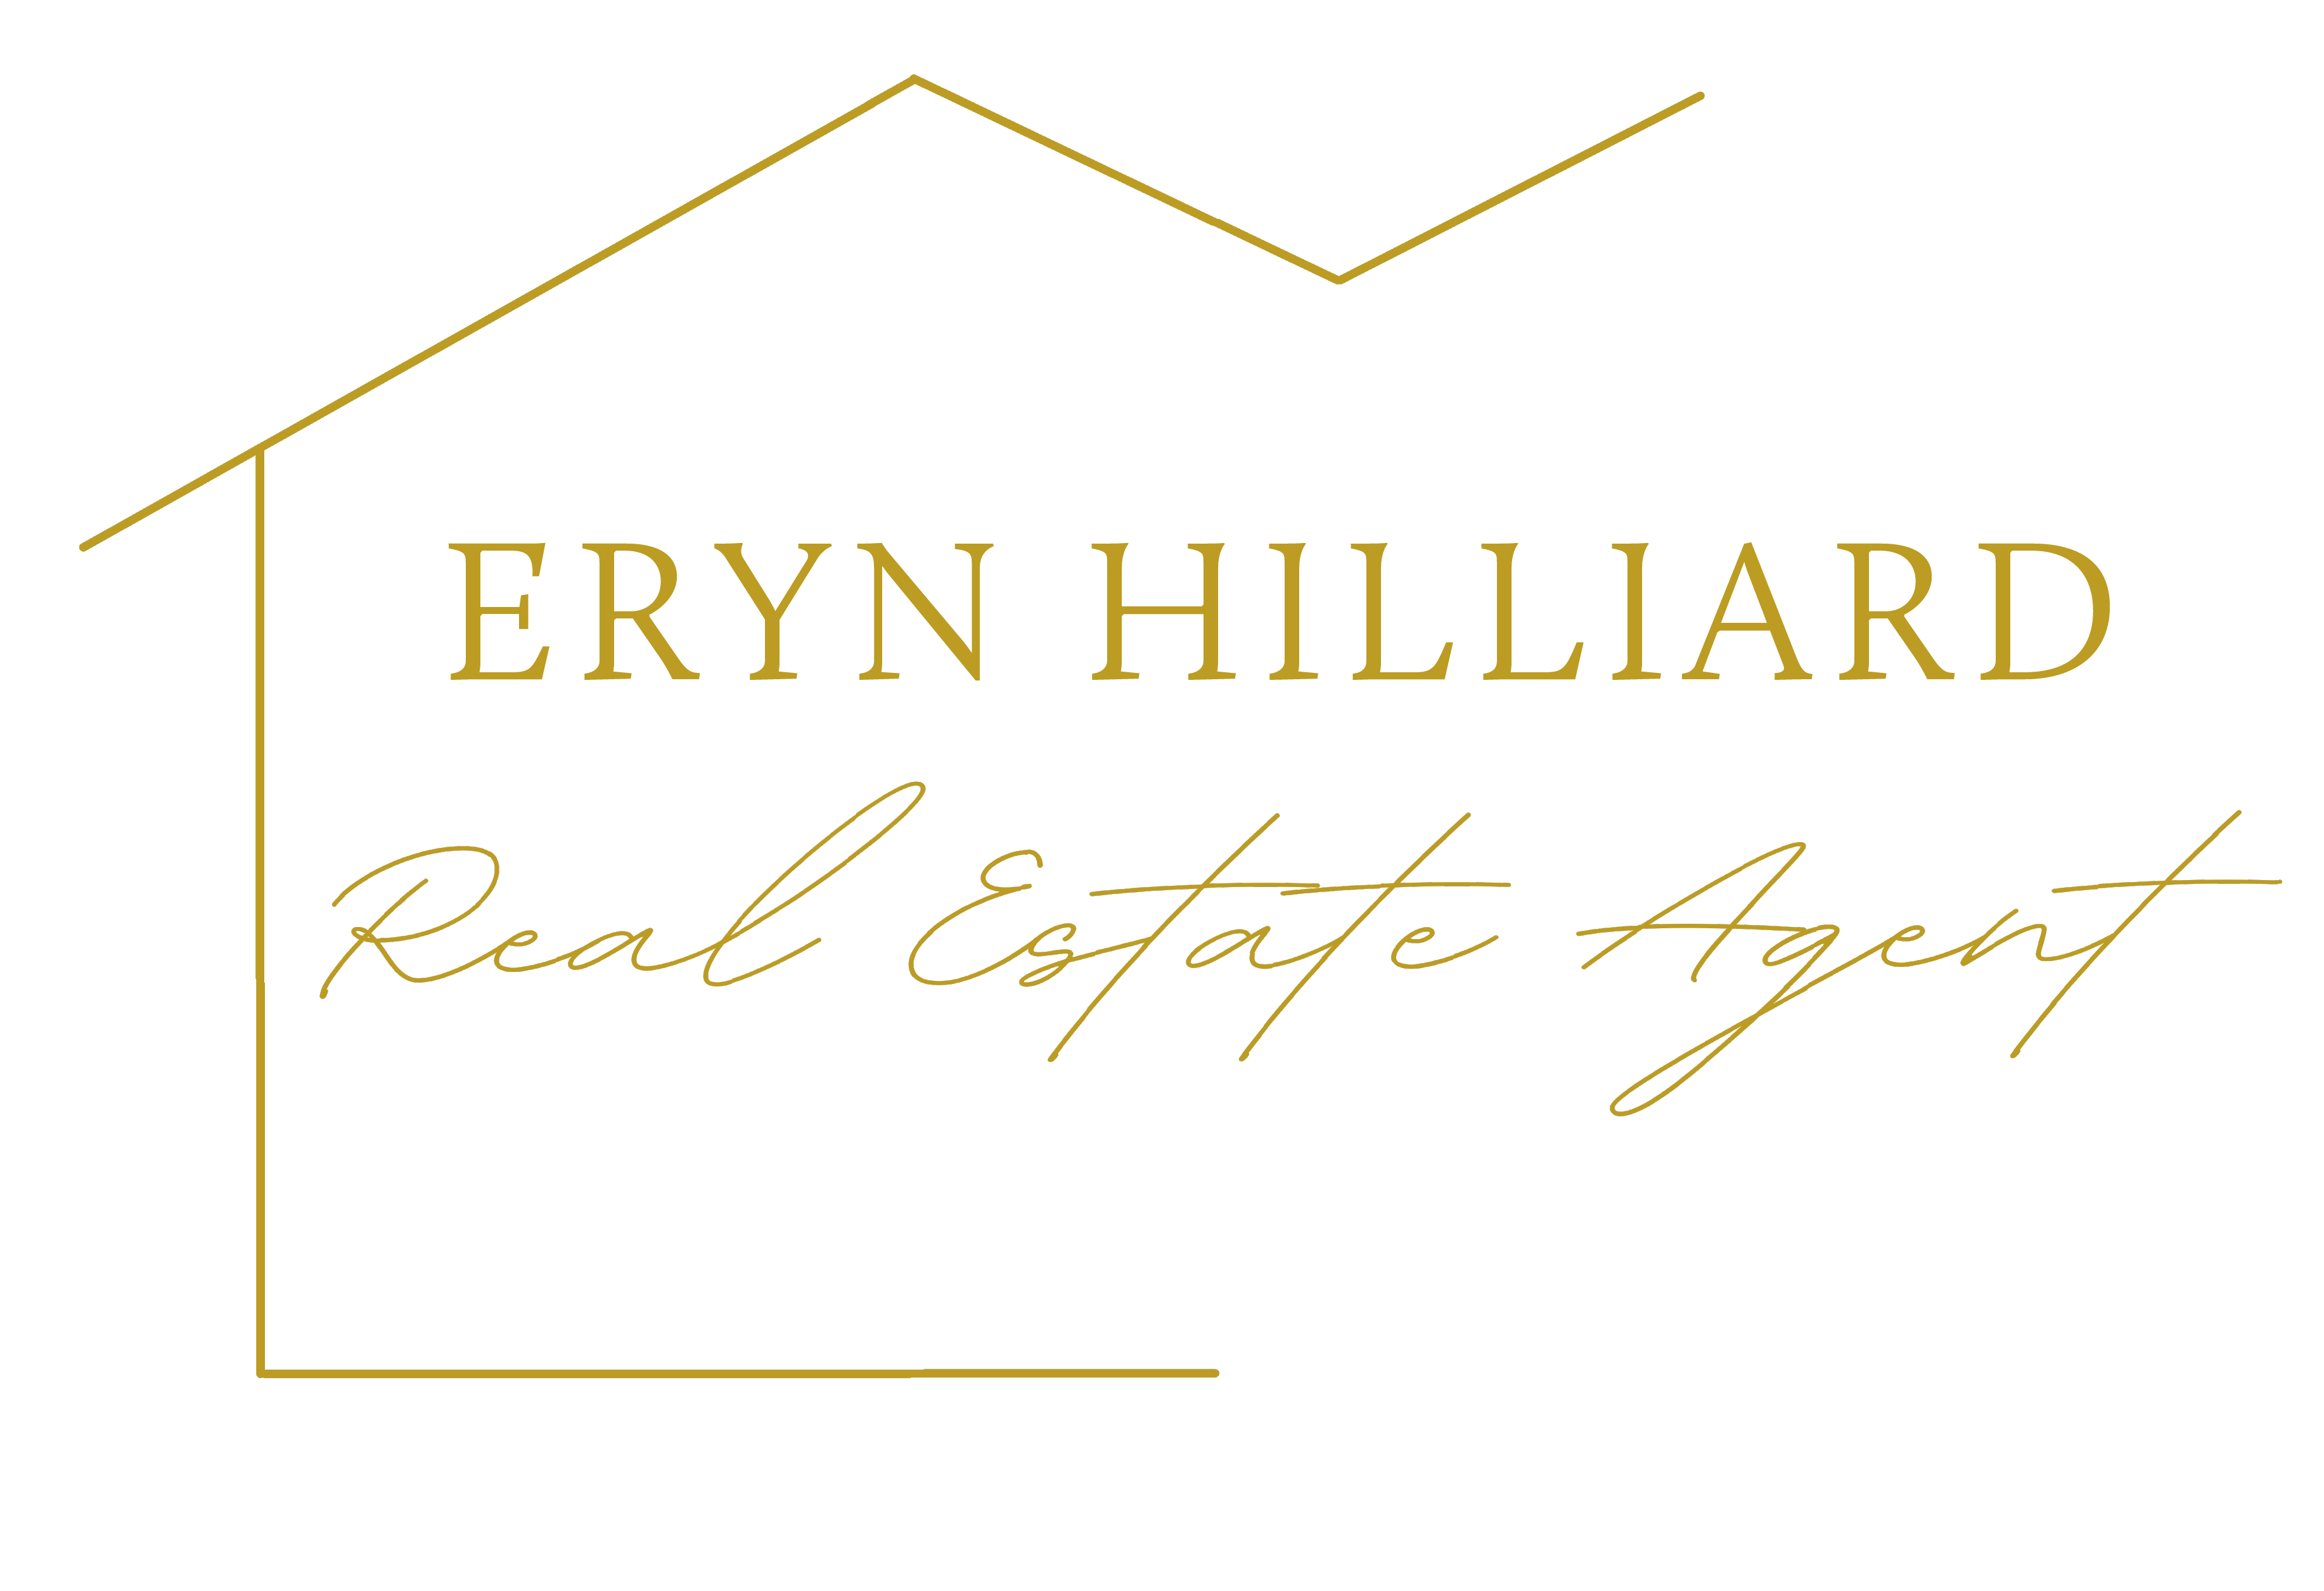 Eryn Hilliard Real Estate Broker